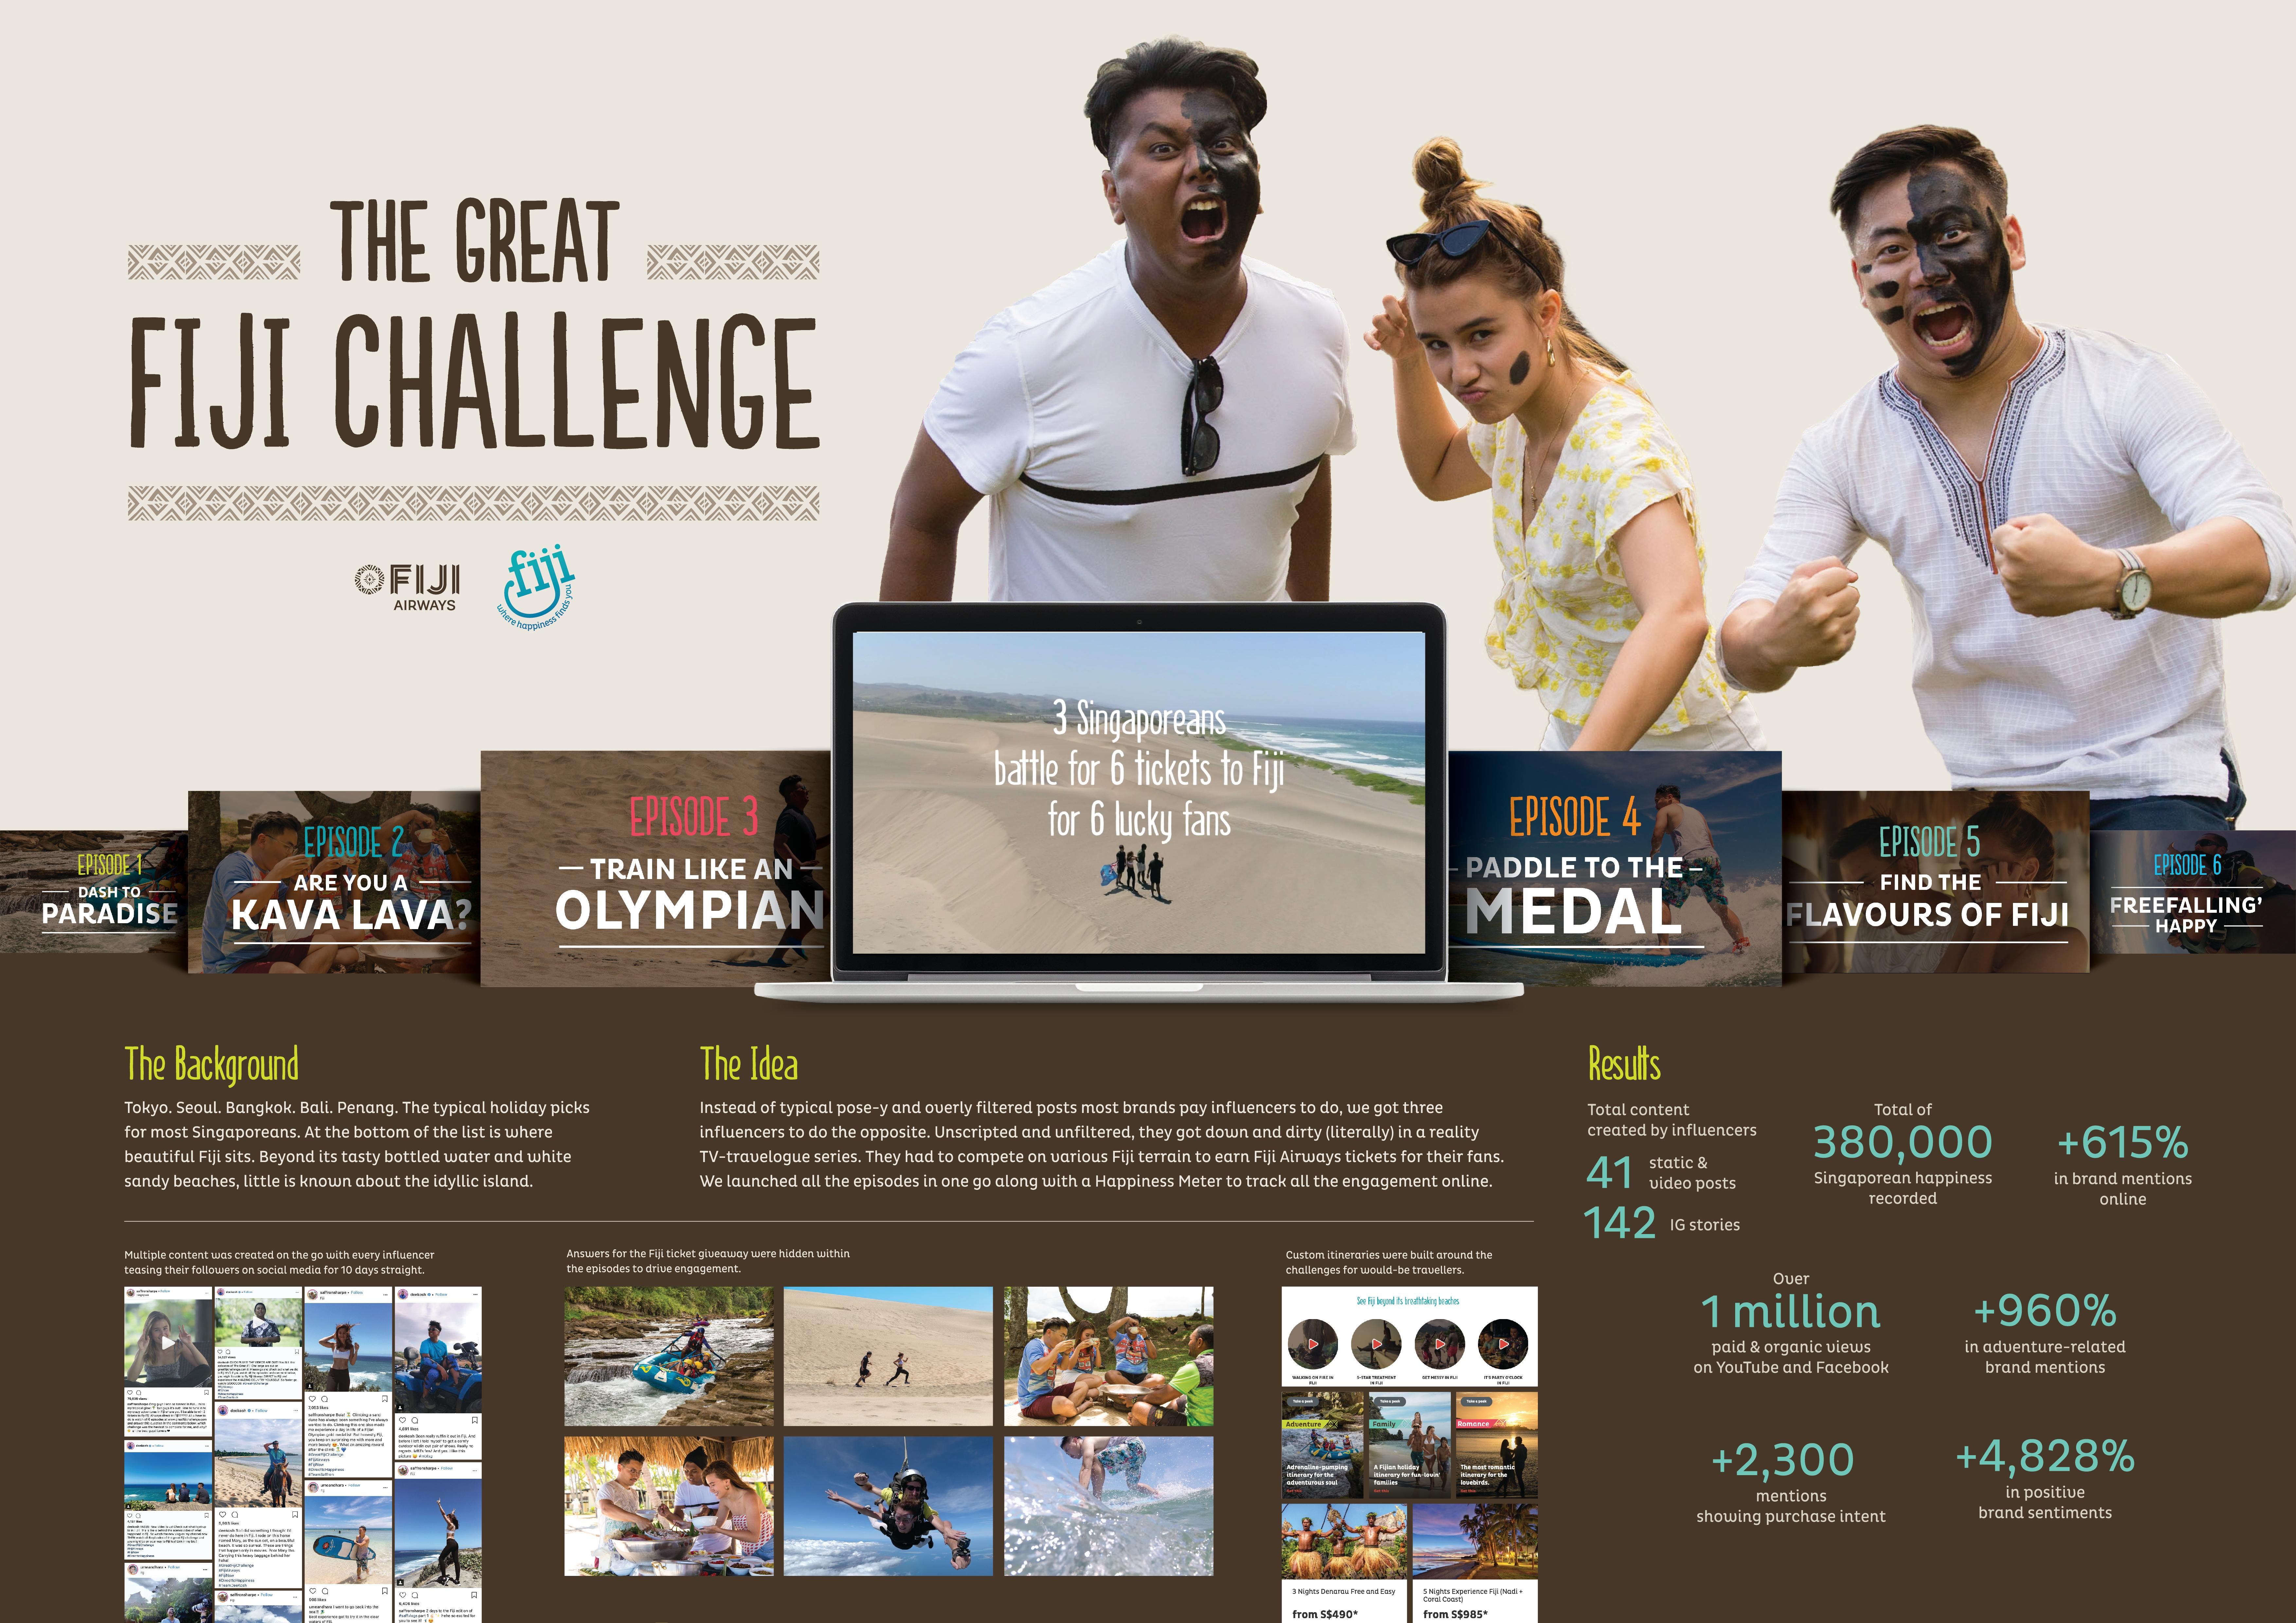 The Great Fiji Challenge